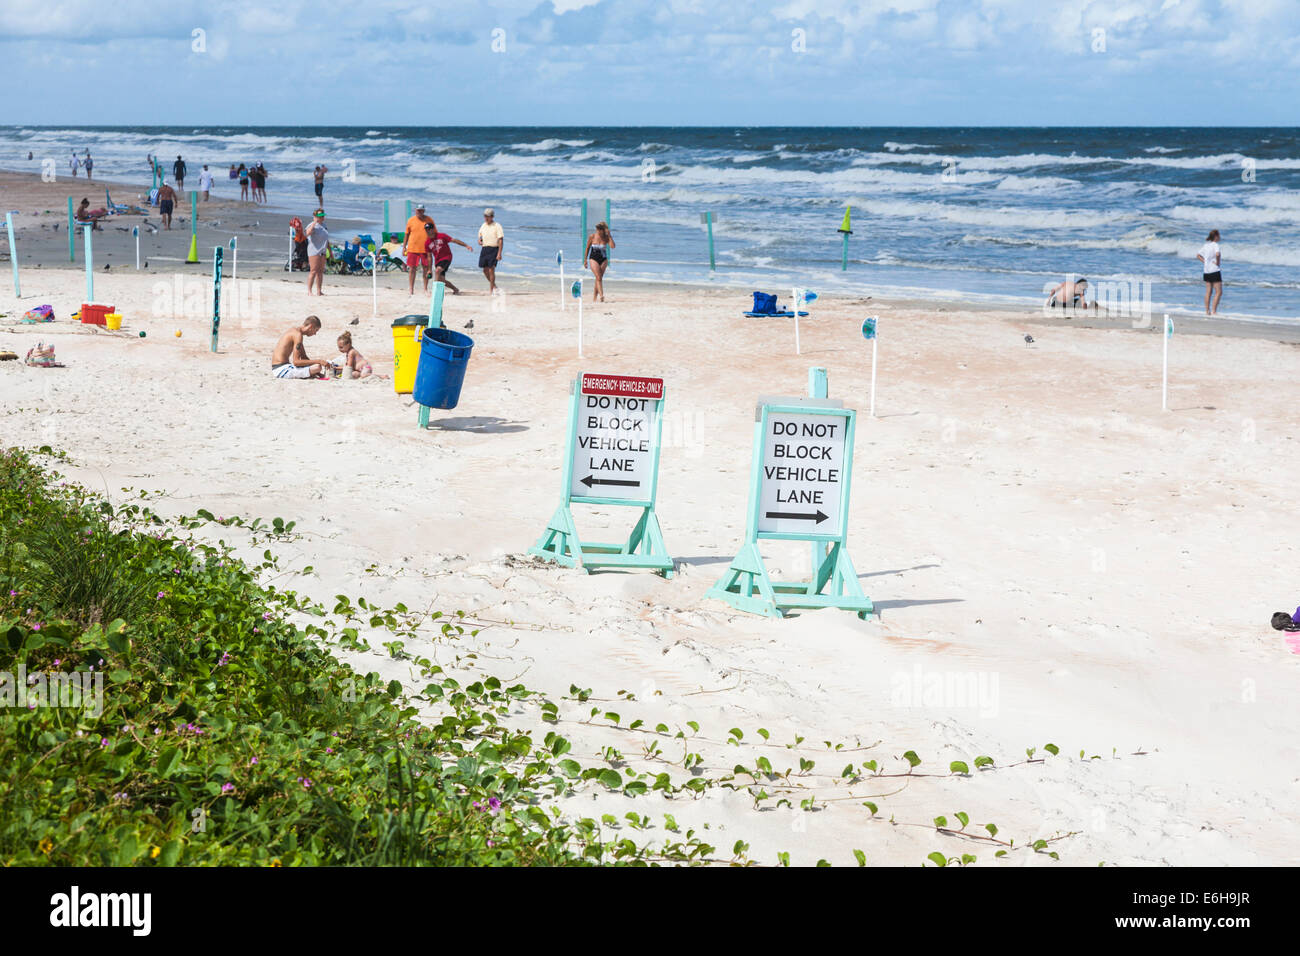 Vehicle traffic signs on the beach at Daytona Beach, Florida Stock Photo